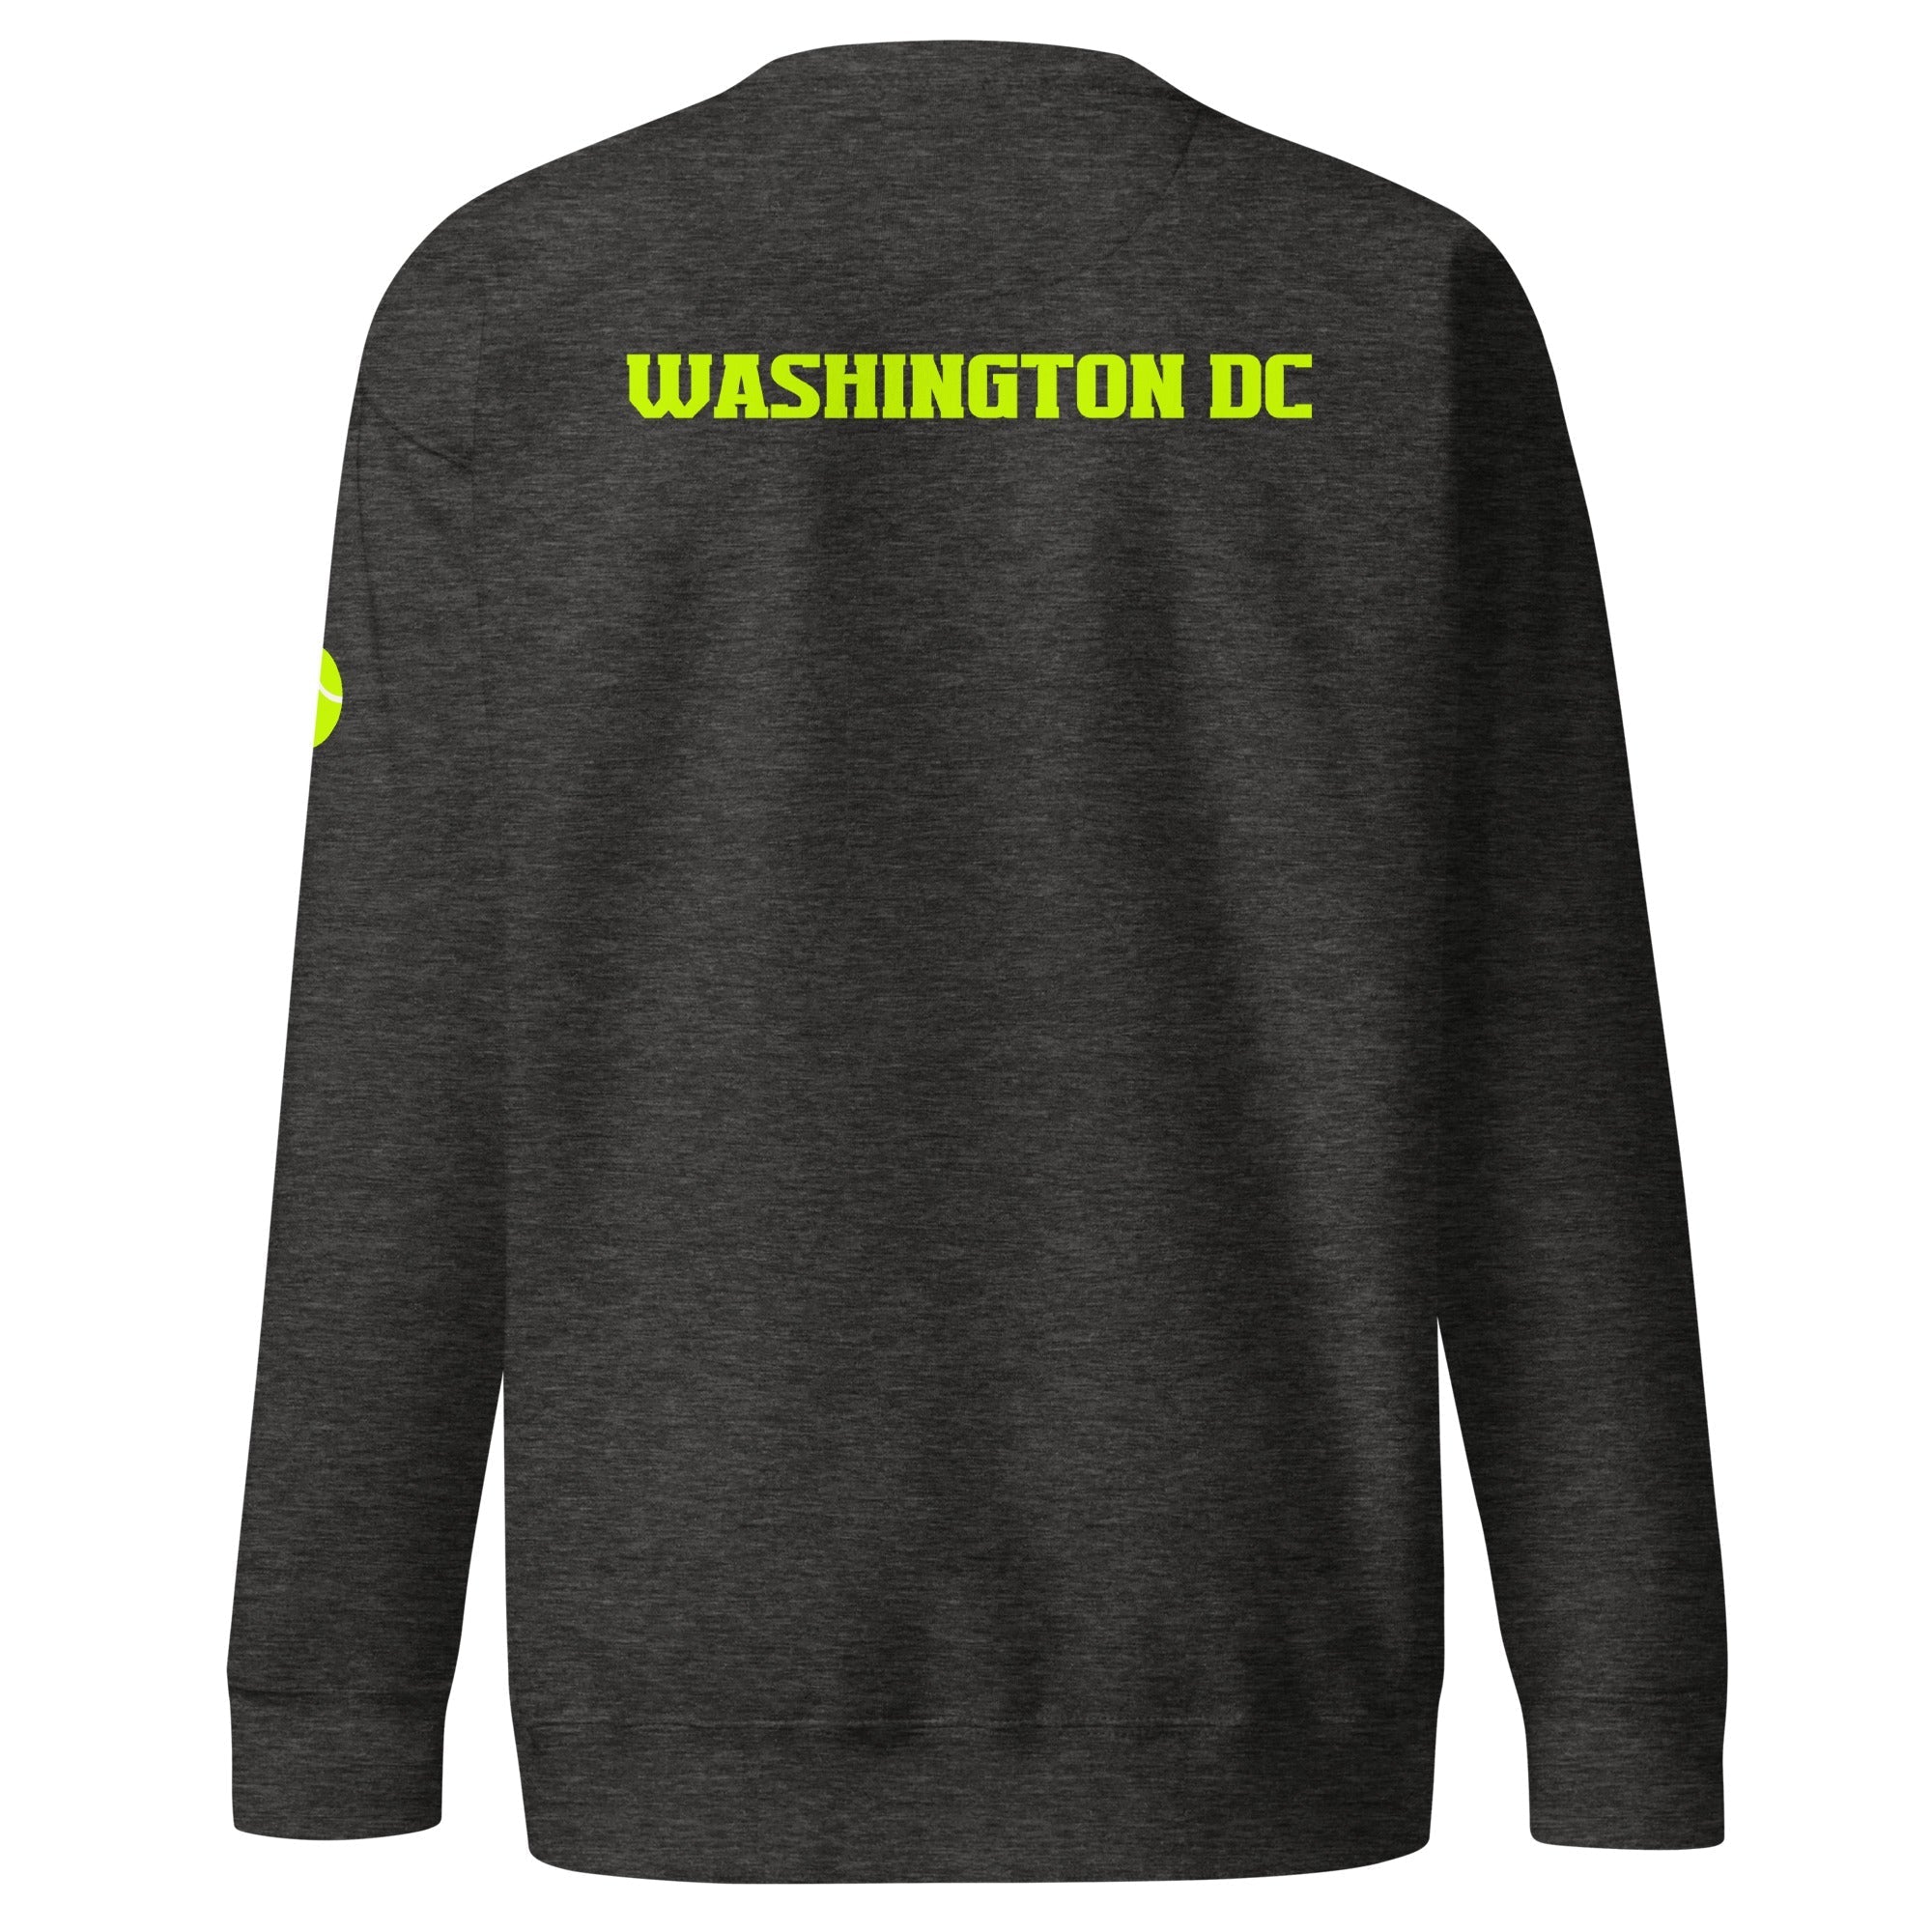 Unisex Premium Sweatshirt - Tennis Masters Washington DC - GRAPHIC T-SHIRTS